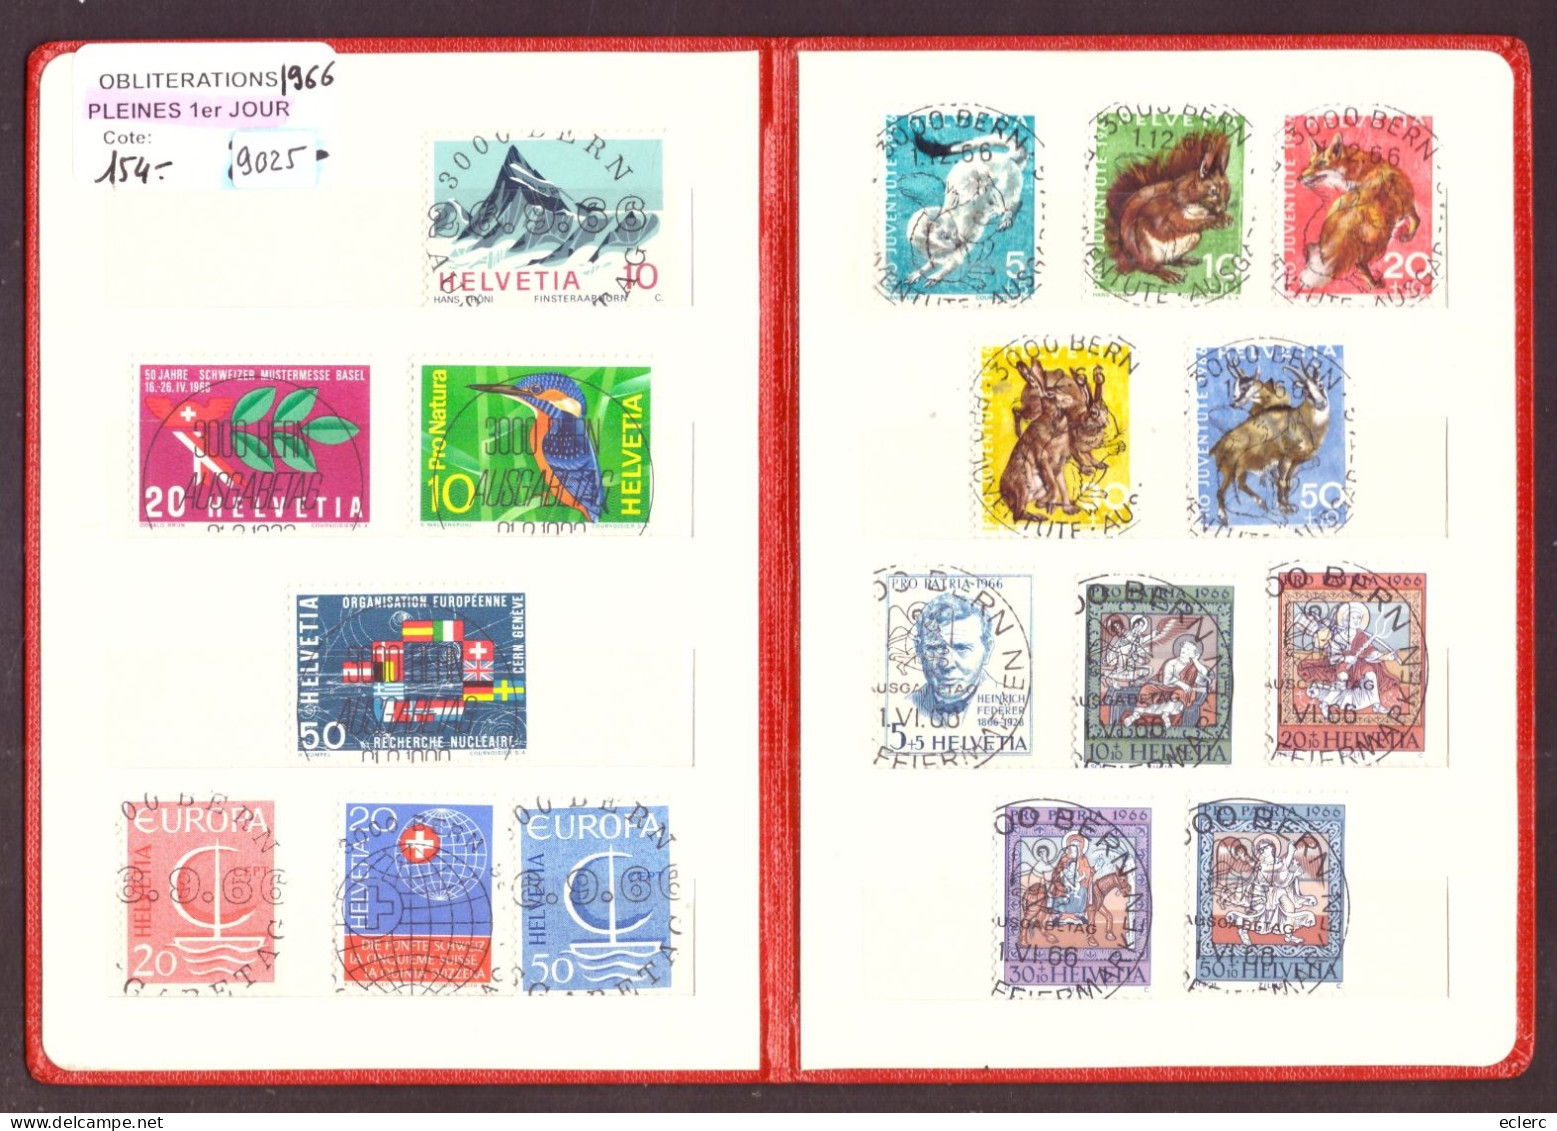 ANNEE COMPLETE 1966 - OBLITERATIONS PLEINES 1er JOUR - ERSTTAG VOLL STEMPELN - COTE: 154.- - Used Stamps